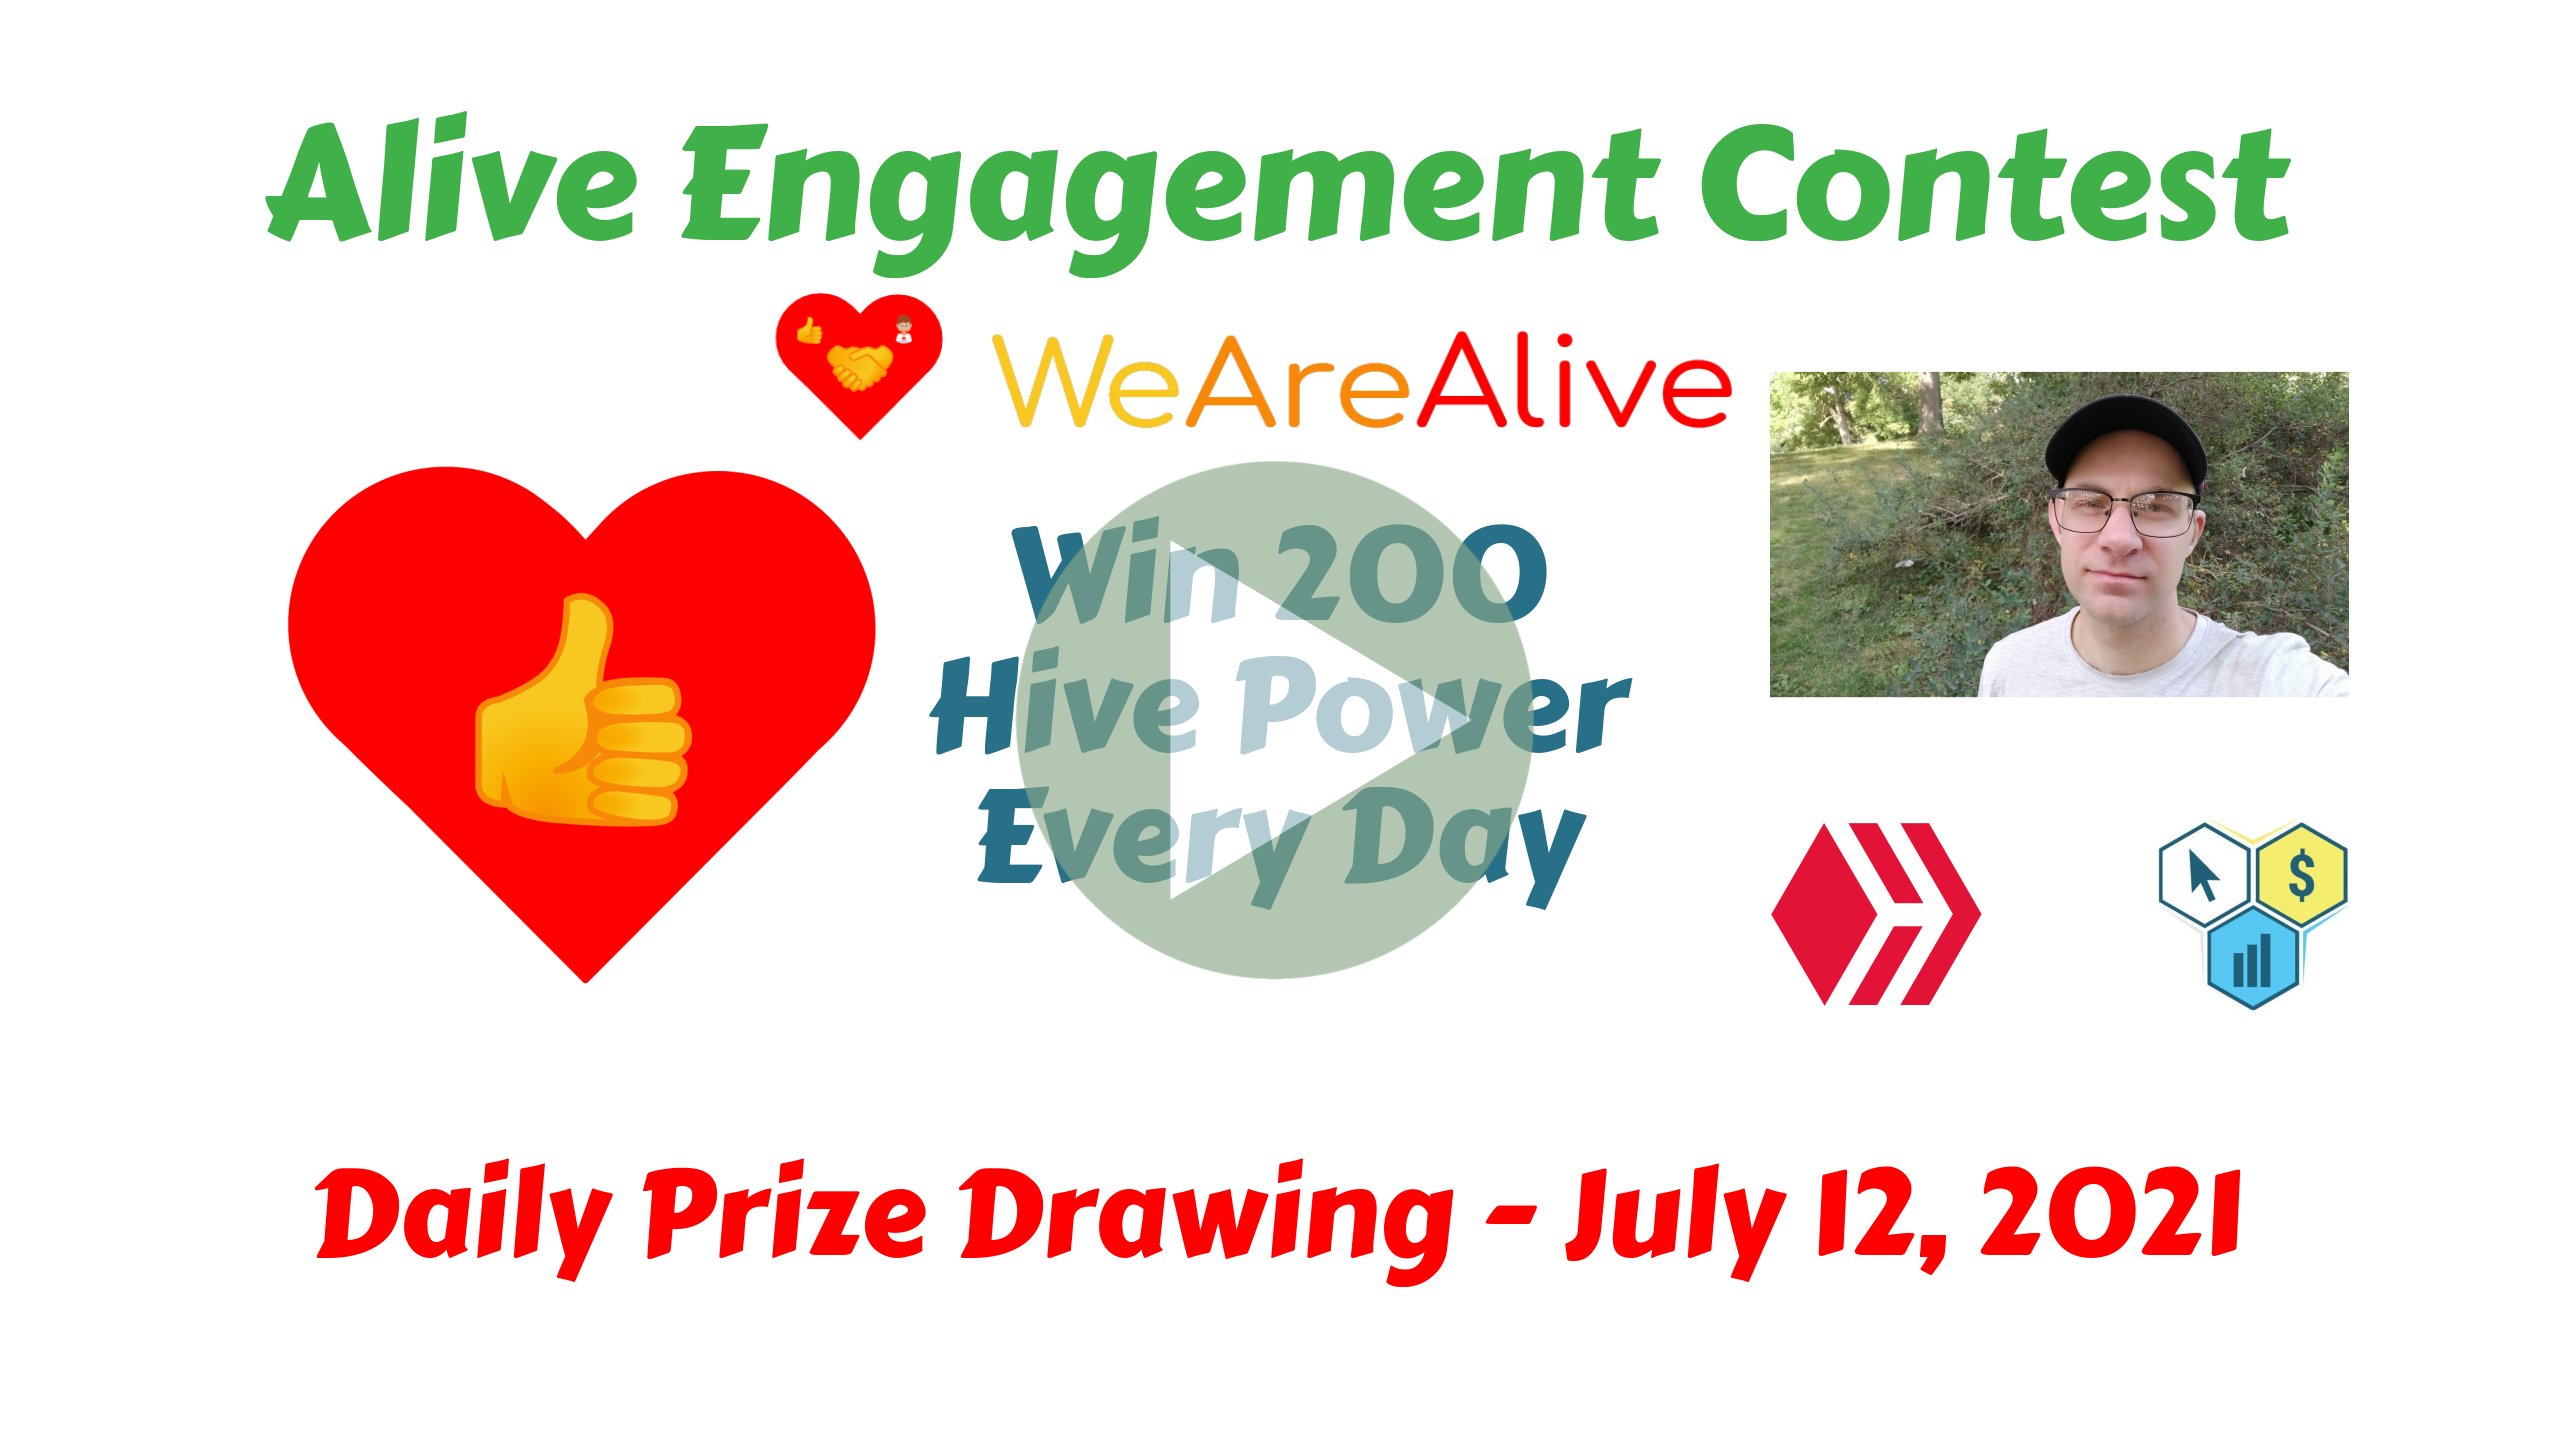 Alive Engagement Contest Video